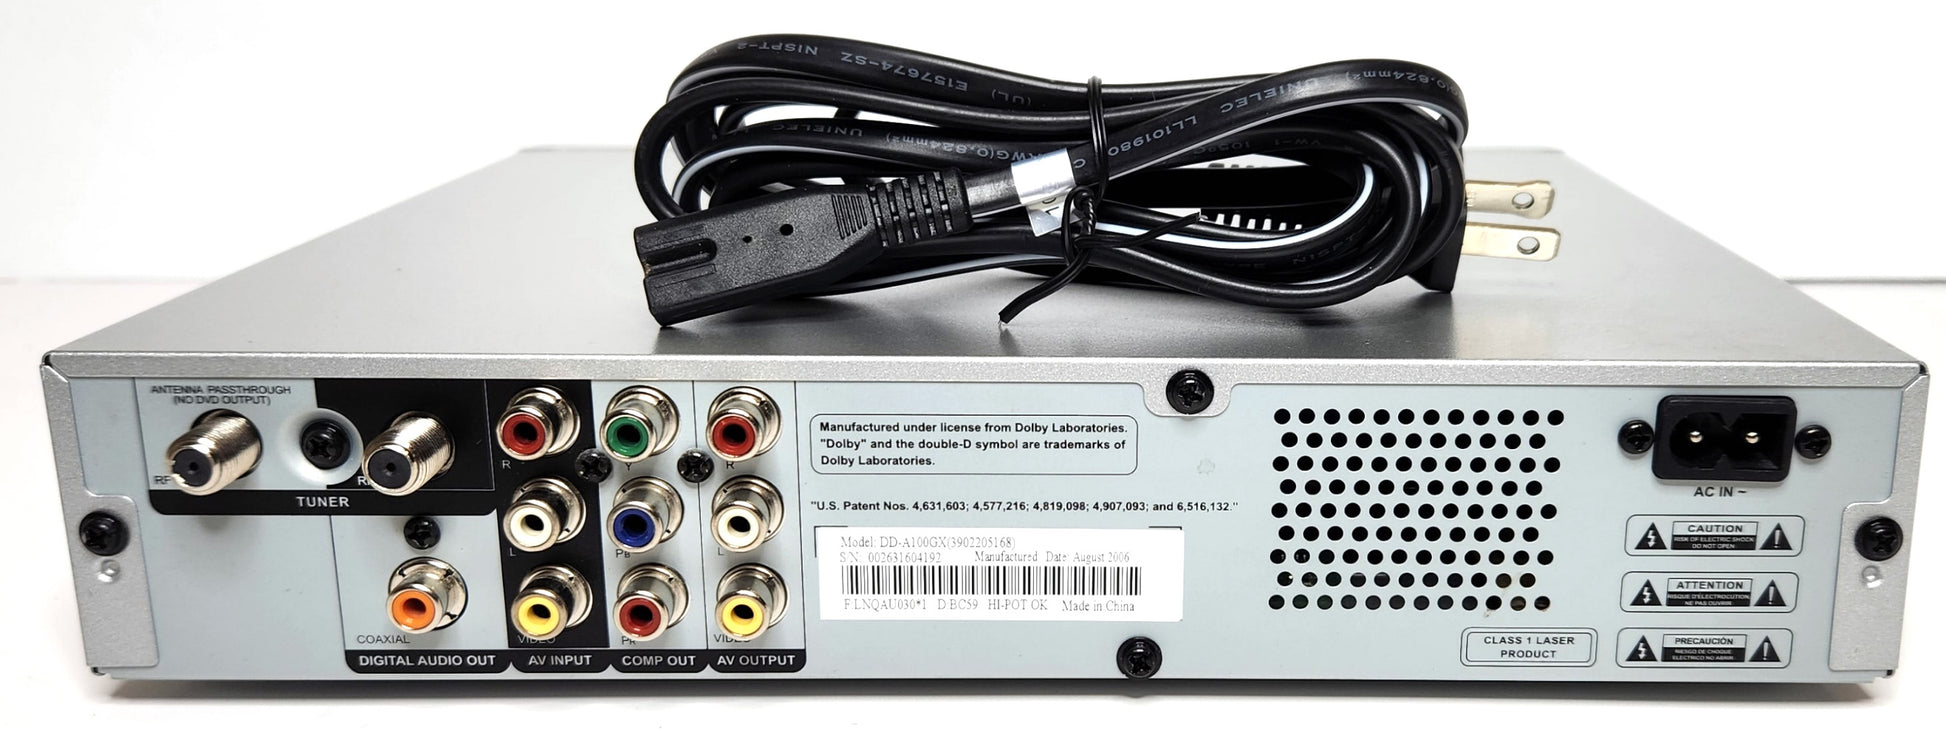 Liteon DD-A100GX DVD Recorder - Rear